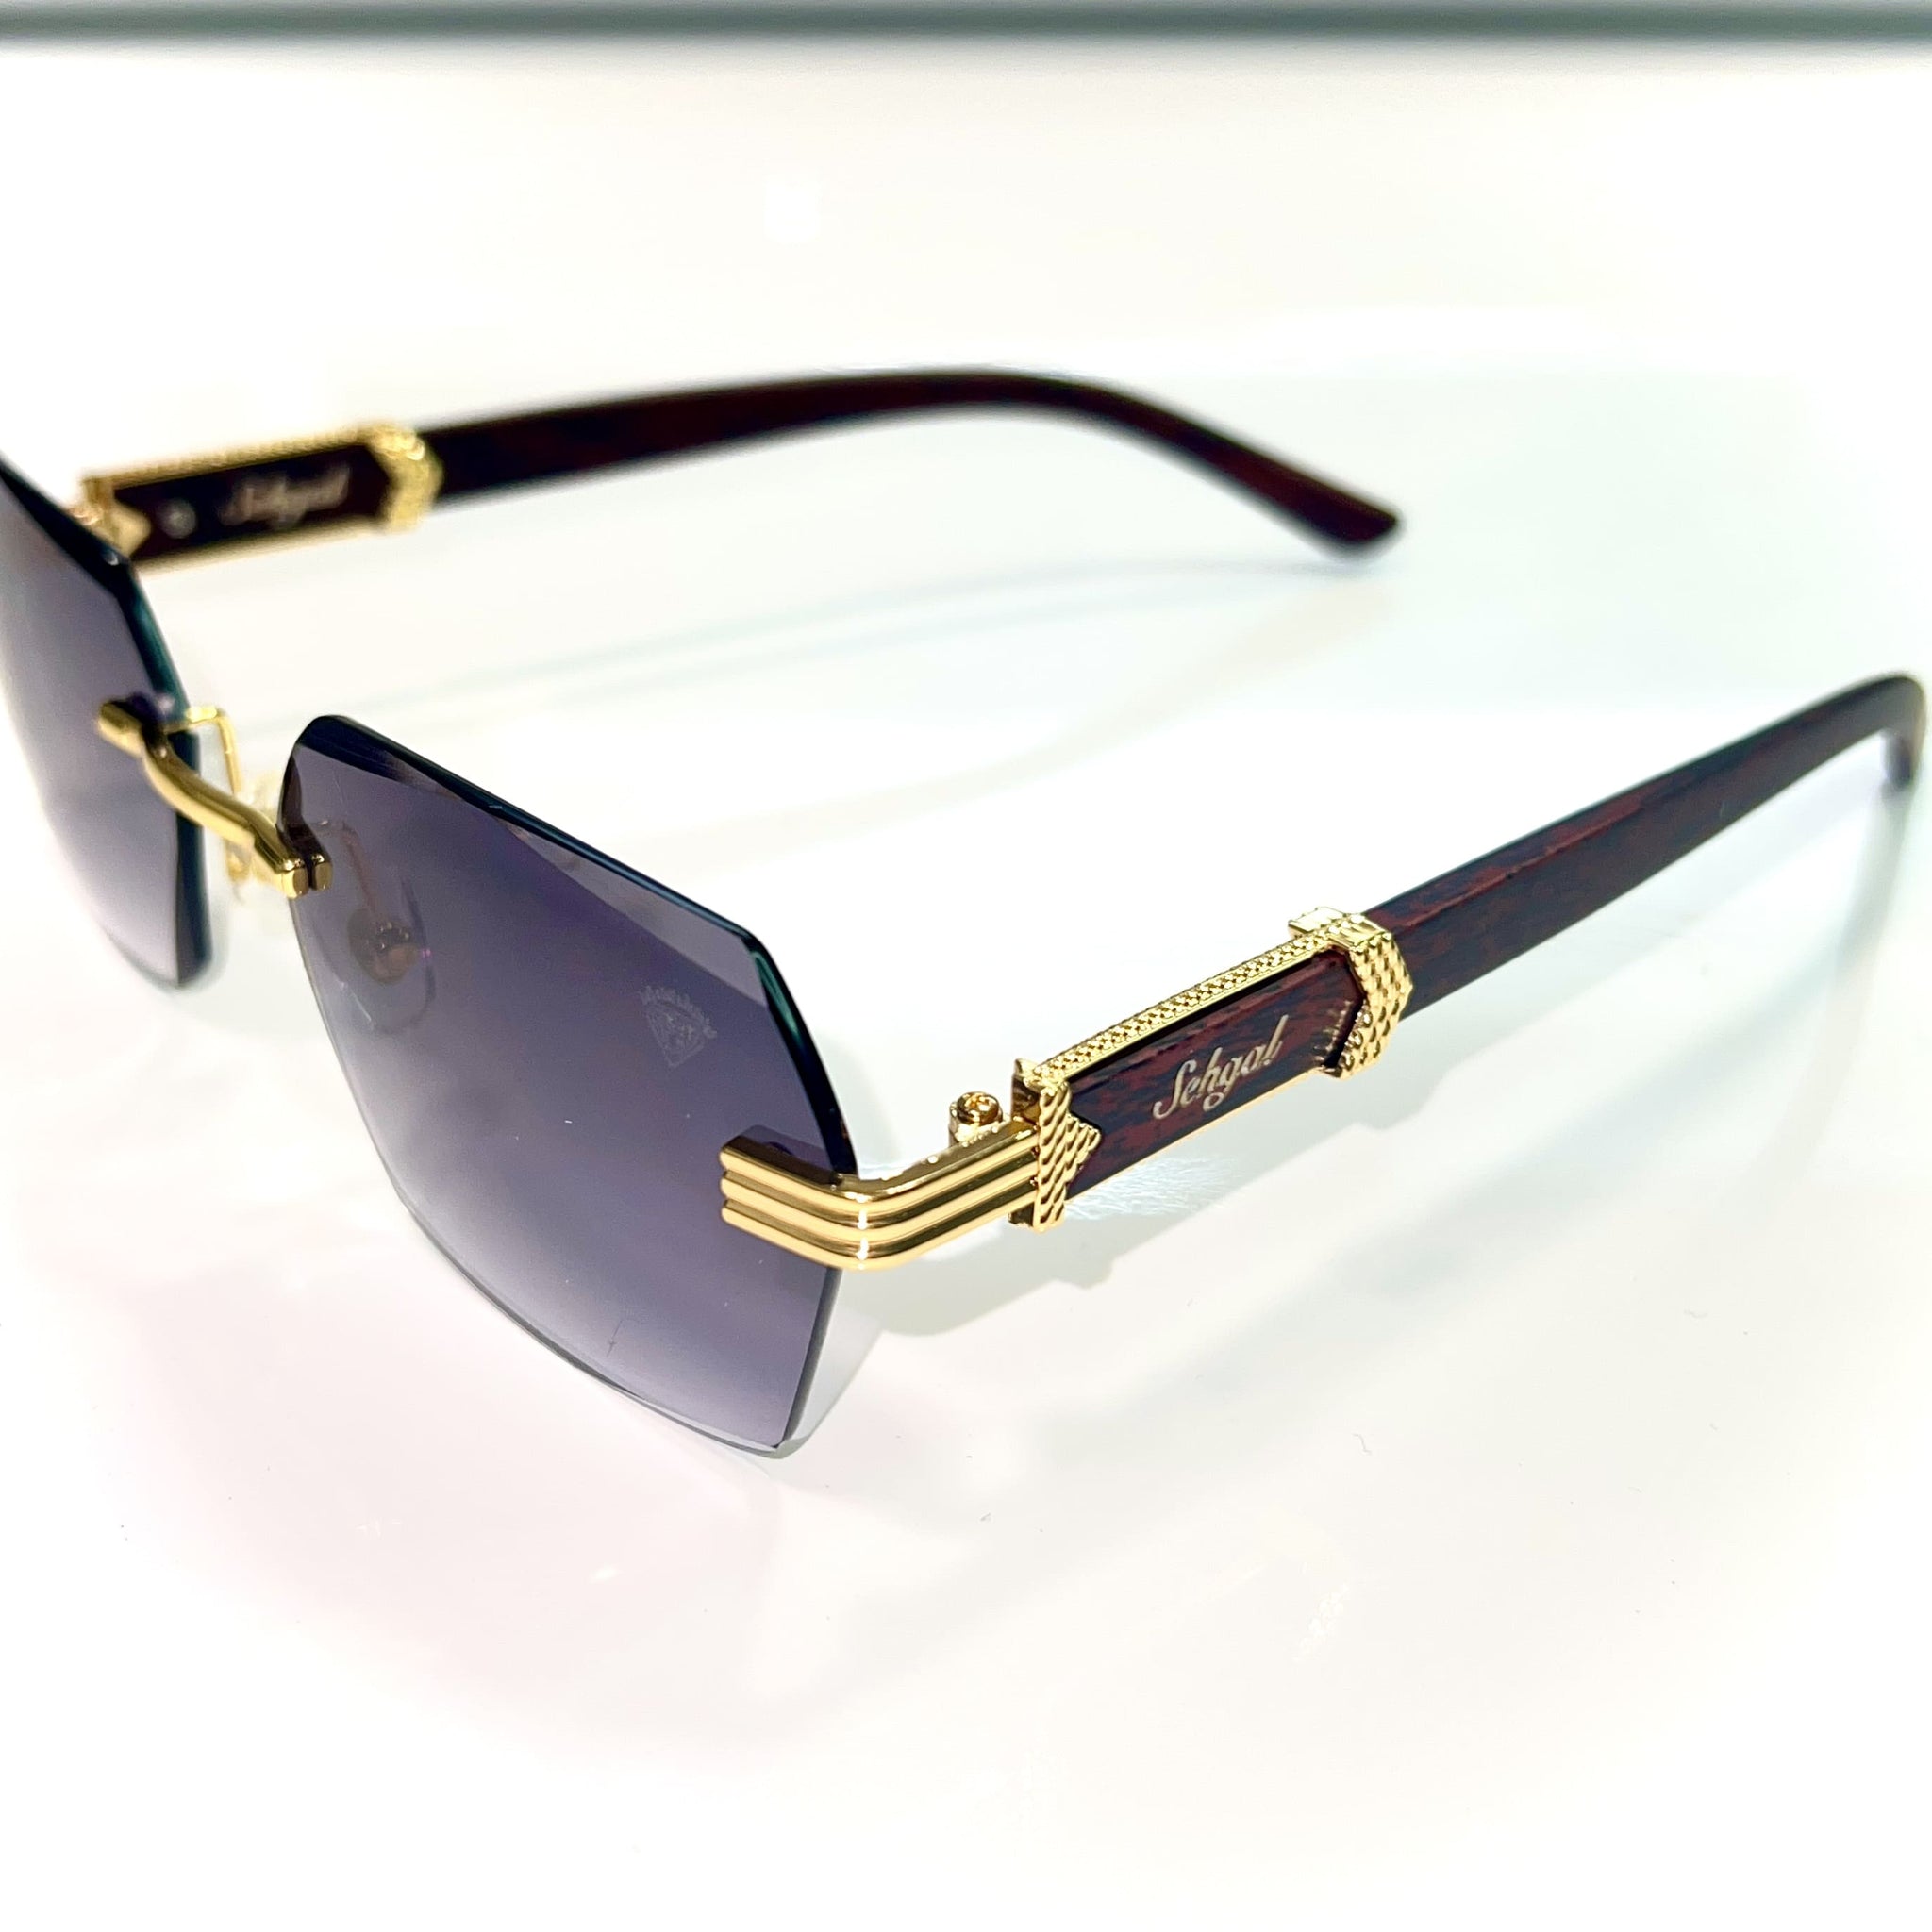 Sehgal Woodcut glasses - 14k gold plated - Grey shade - Gold / Woodgrain frame